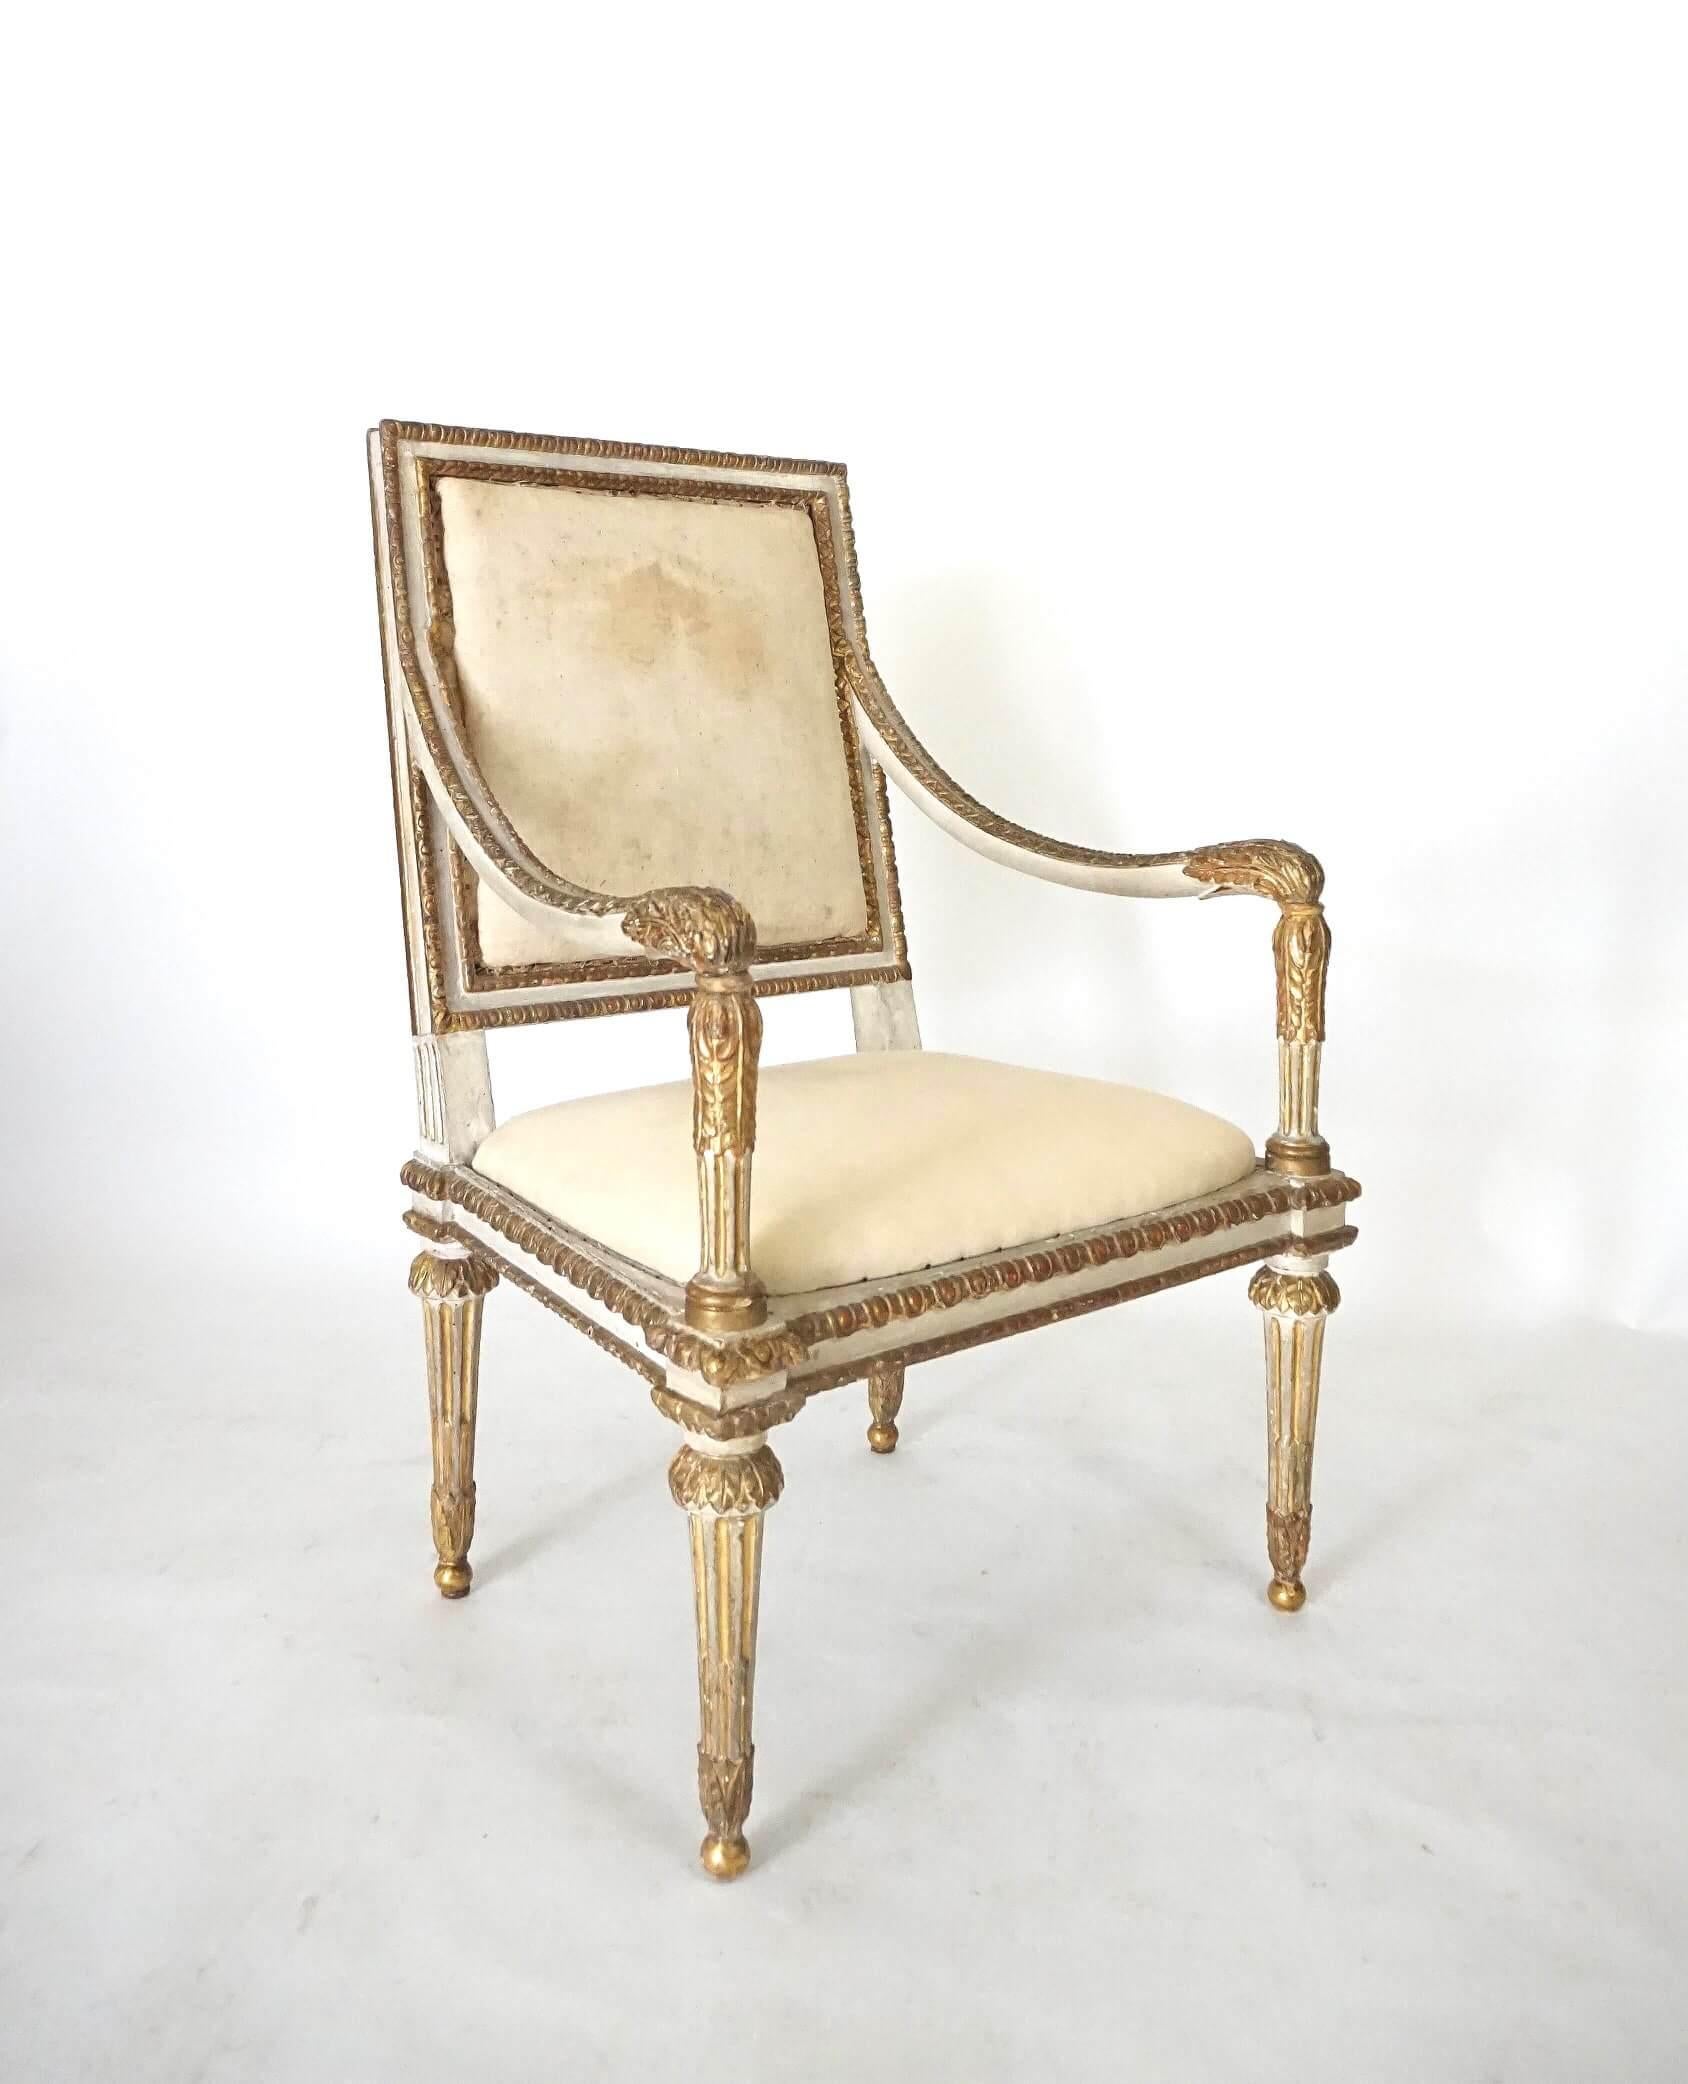 An unusual circa 1780 Italian Neapolitan Louis XVI style fauteuil or open-armchair of large 